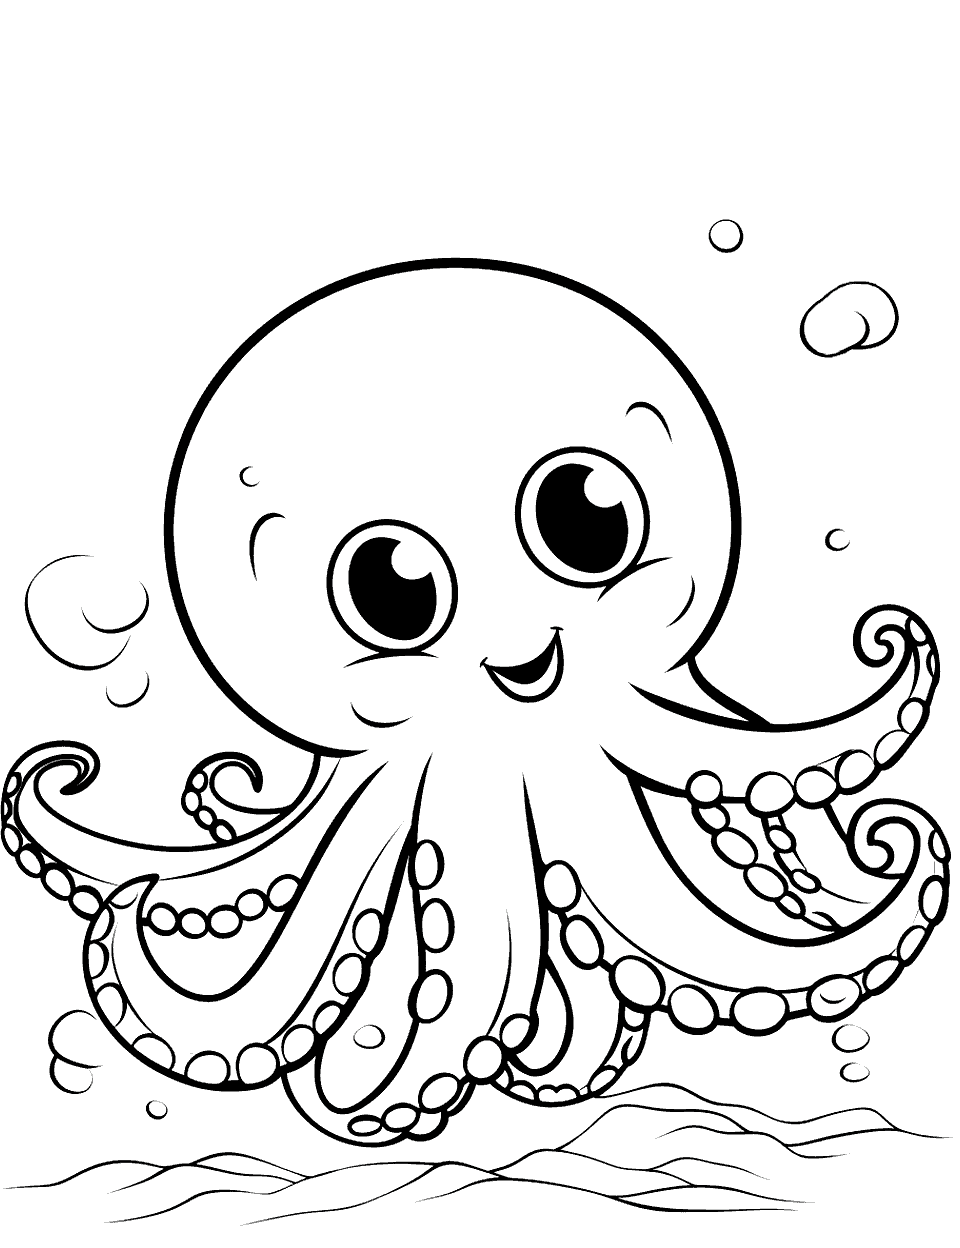 Octopus Walking Coloring Page - An octopus walking happily on the ocean floor.